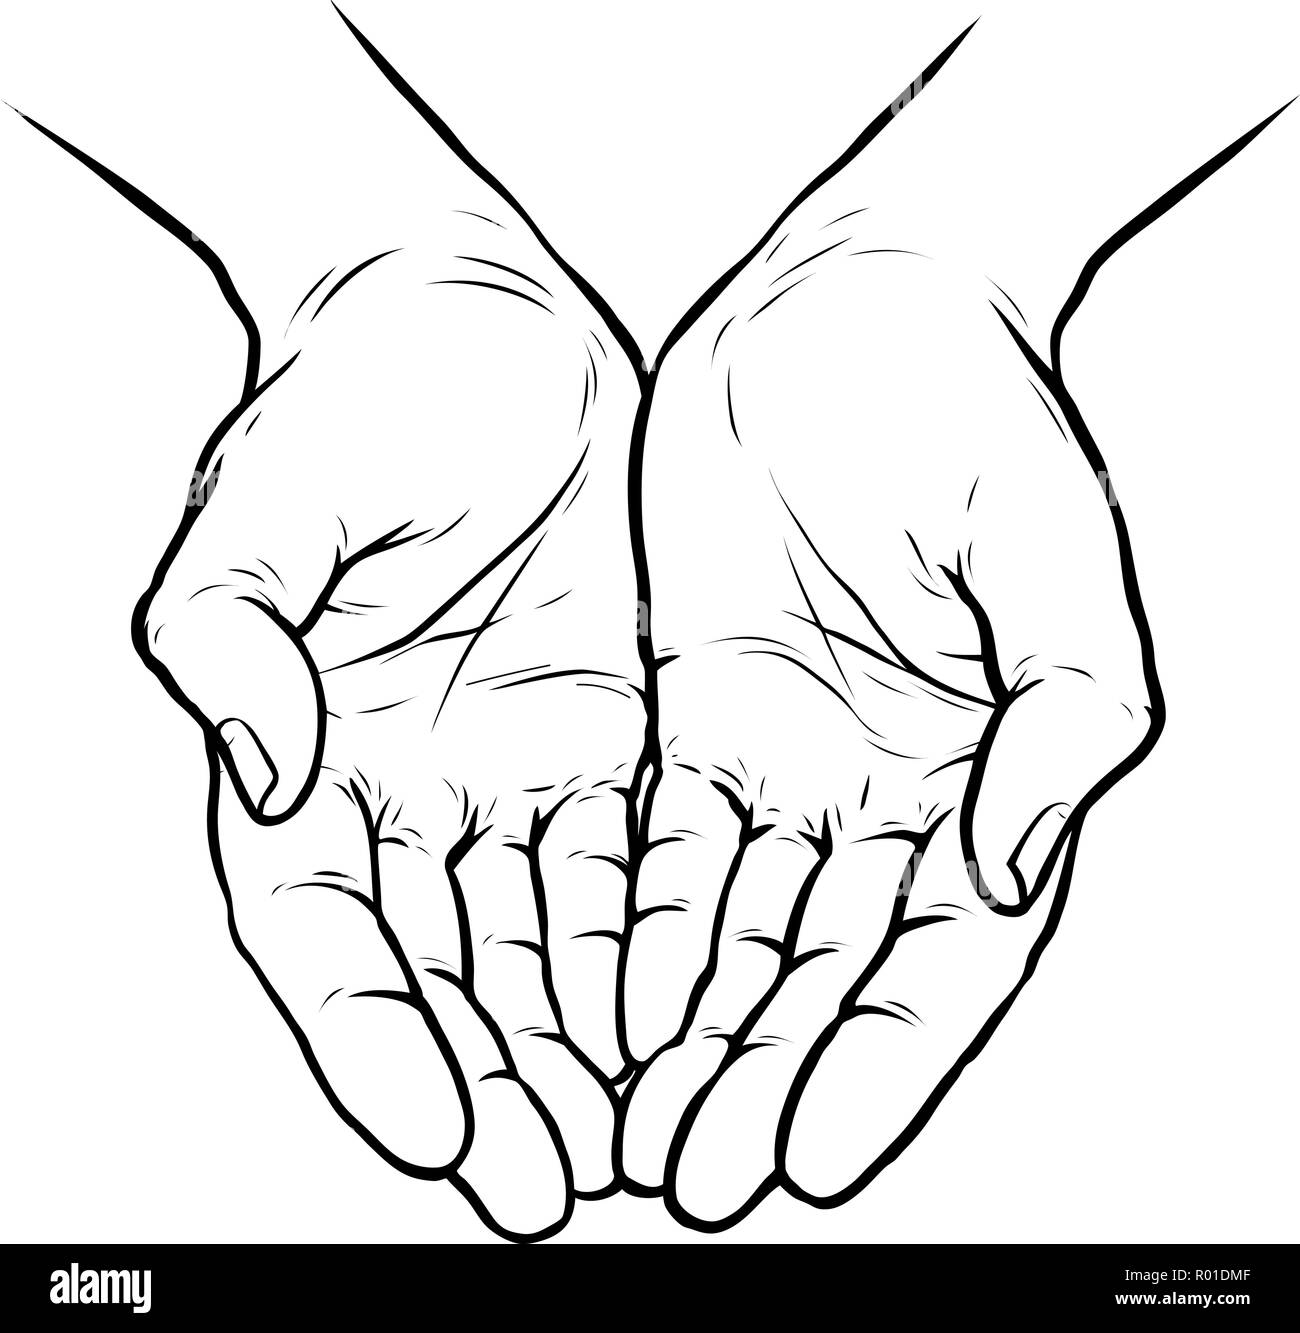 Hands Together Drawing Images  Free Download on Freepik